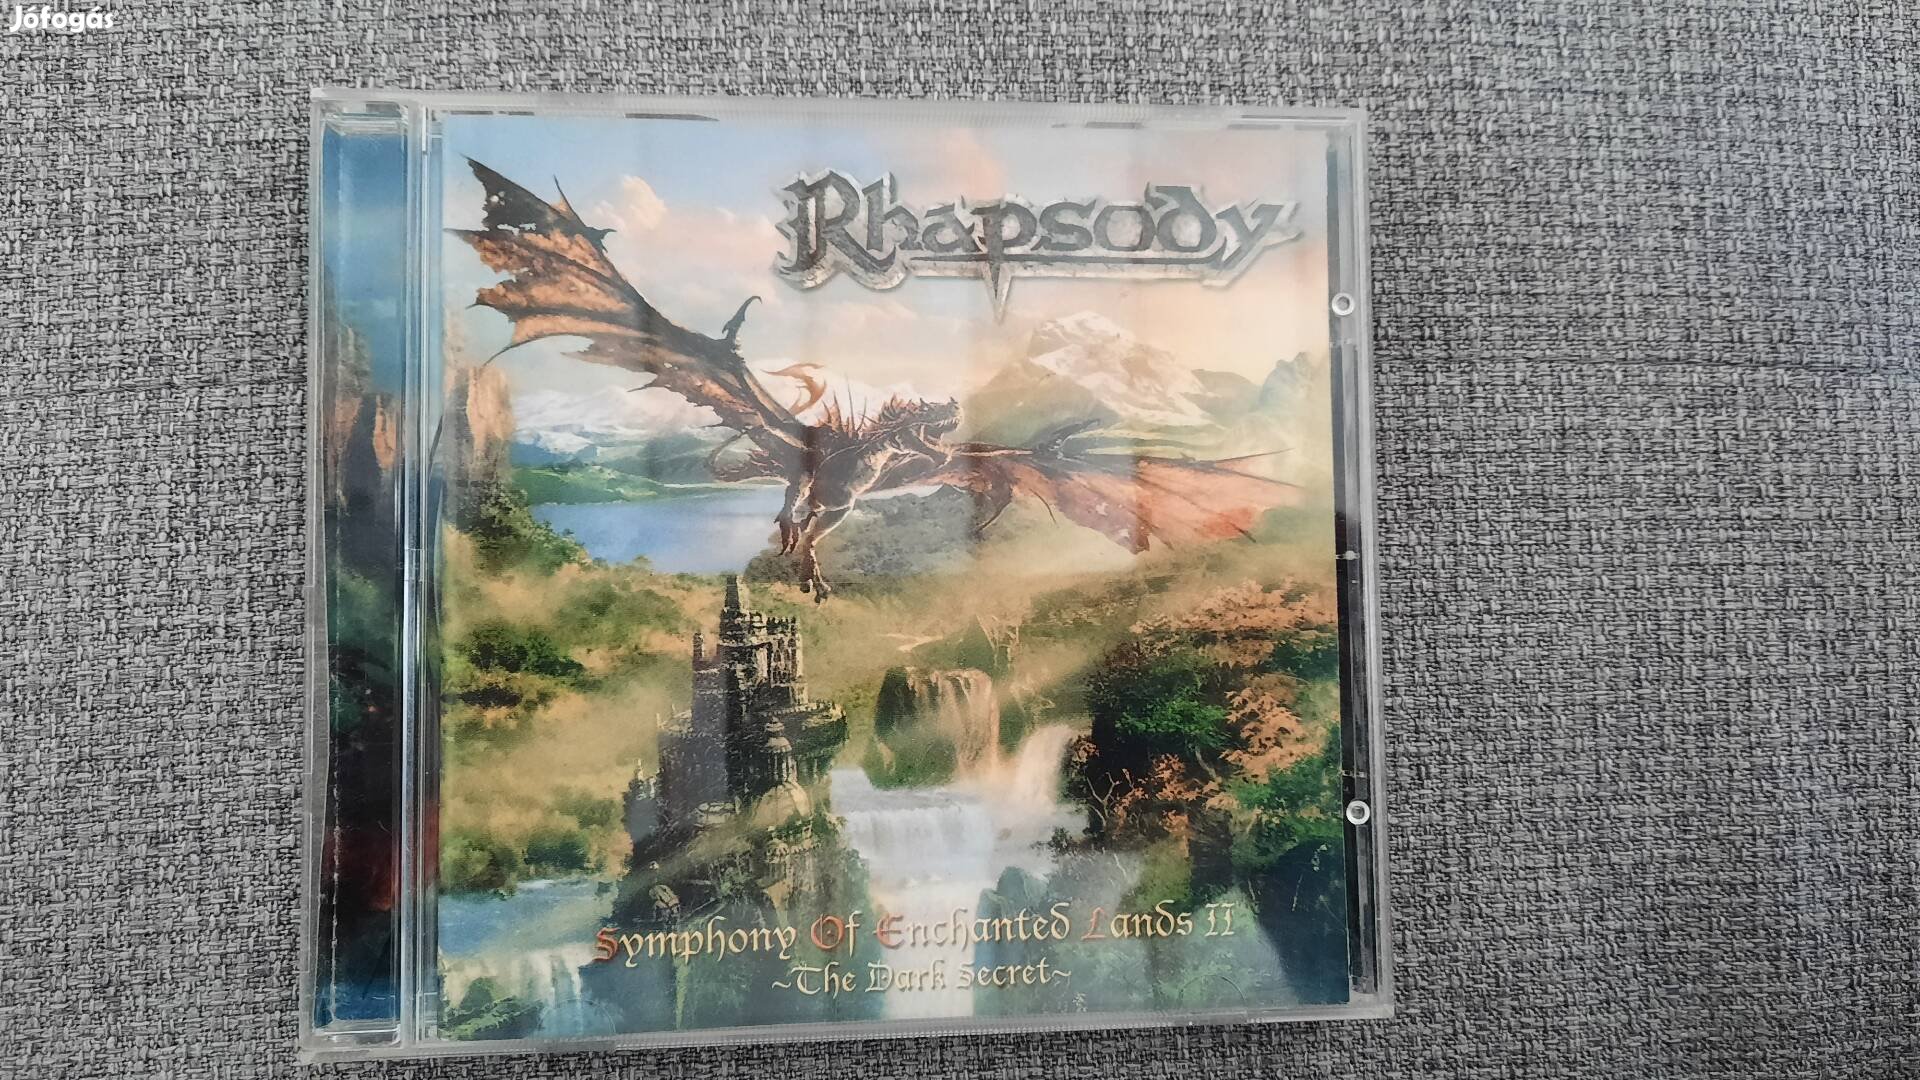 Rhapsody Symphony of enchanted Lands II. - The dark secret cd